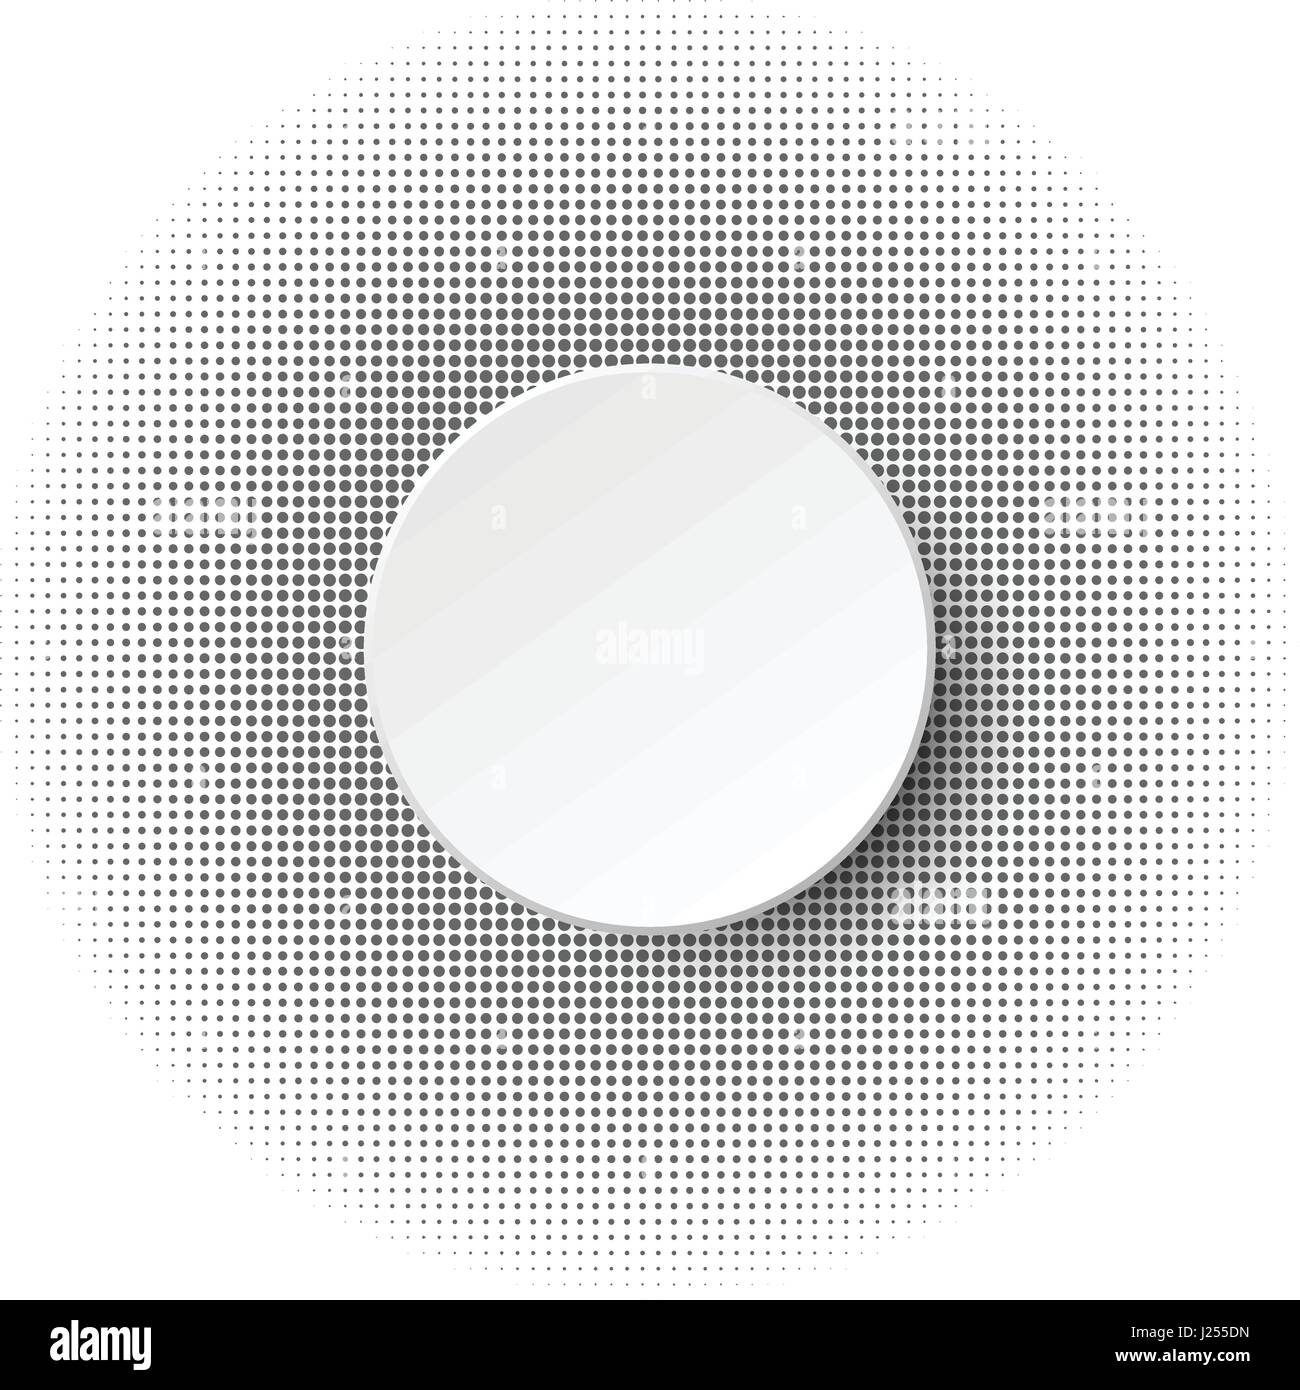 3d Kreis Papier Vektor Design Auf Graue Punkte Halbtonmuster Fur Abstrakte Hintergrund Konzept Stock Vektorgrafik Alamy